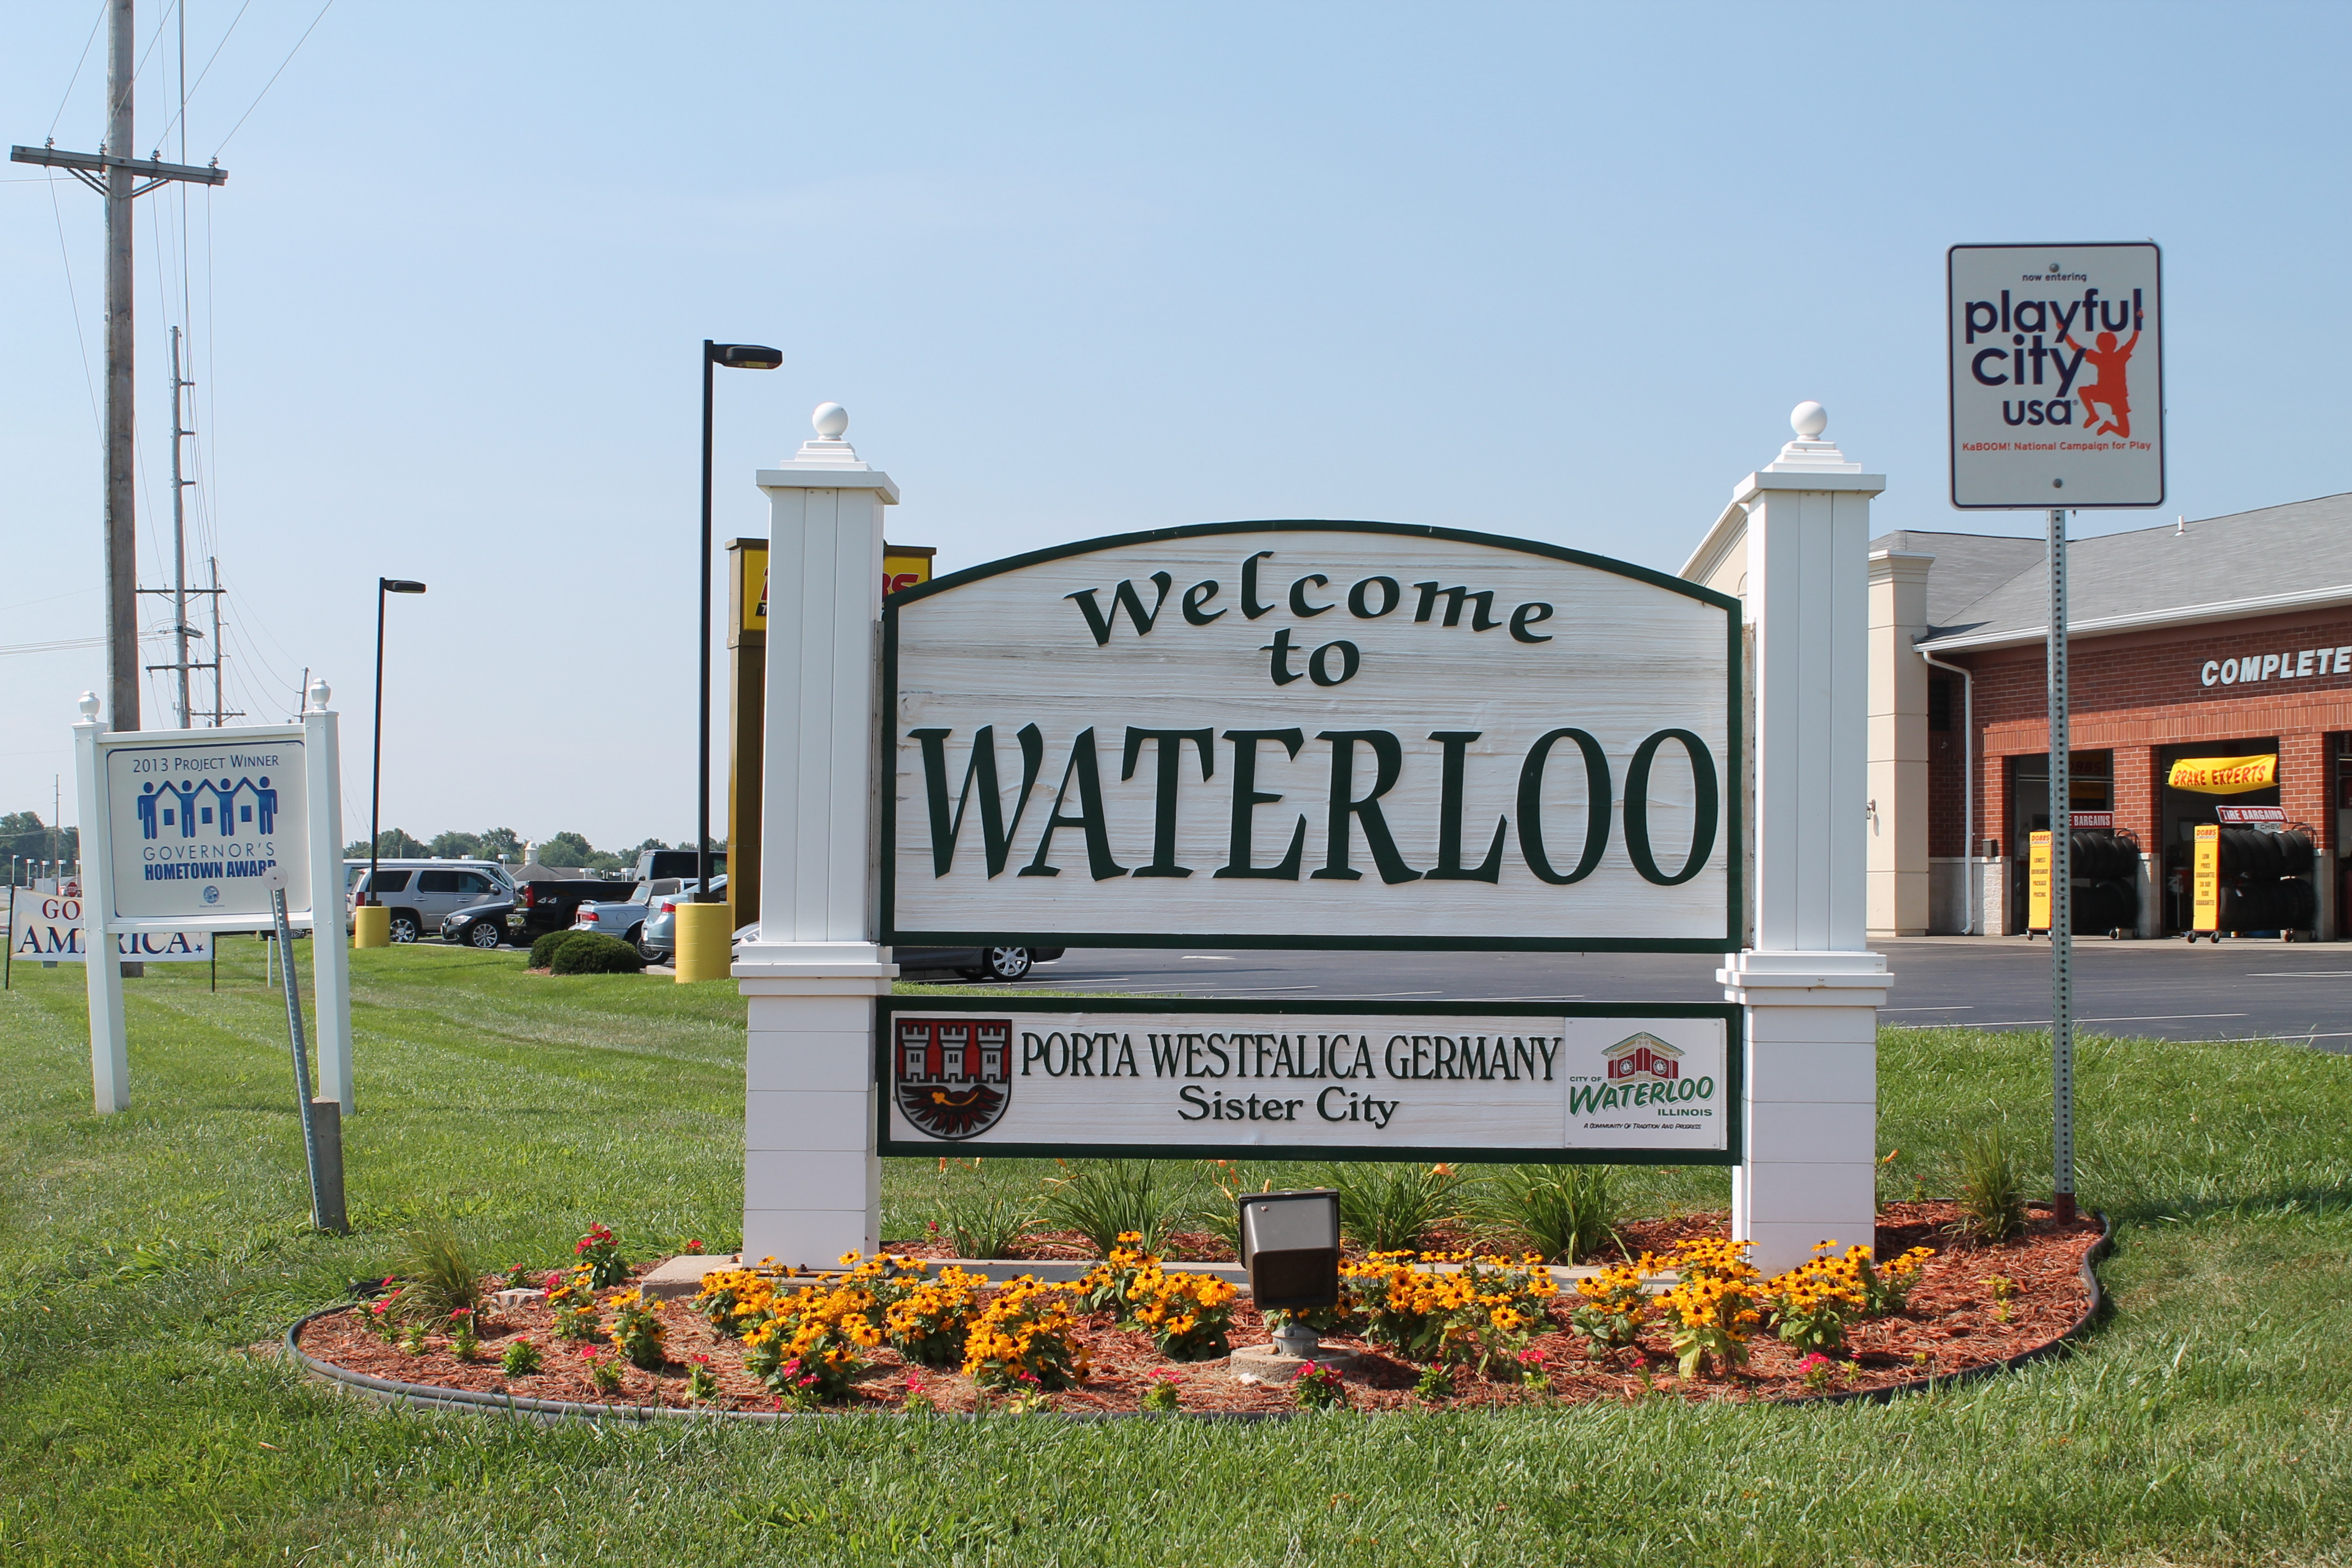 Visiting Waterloo City of Waterloo, IL